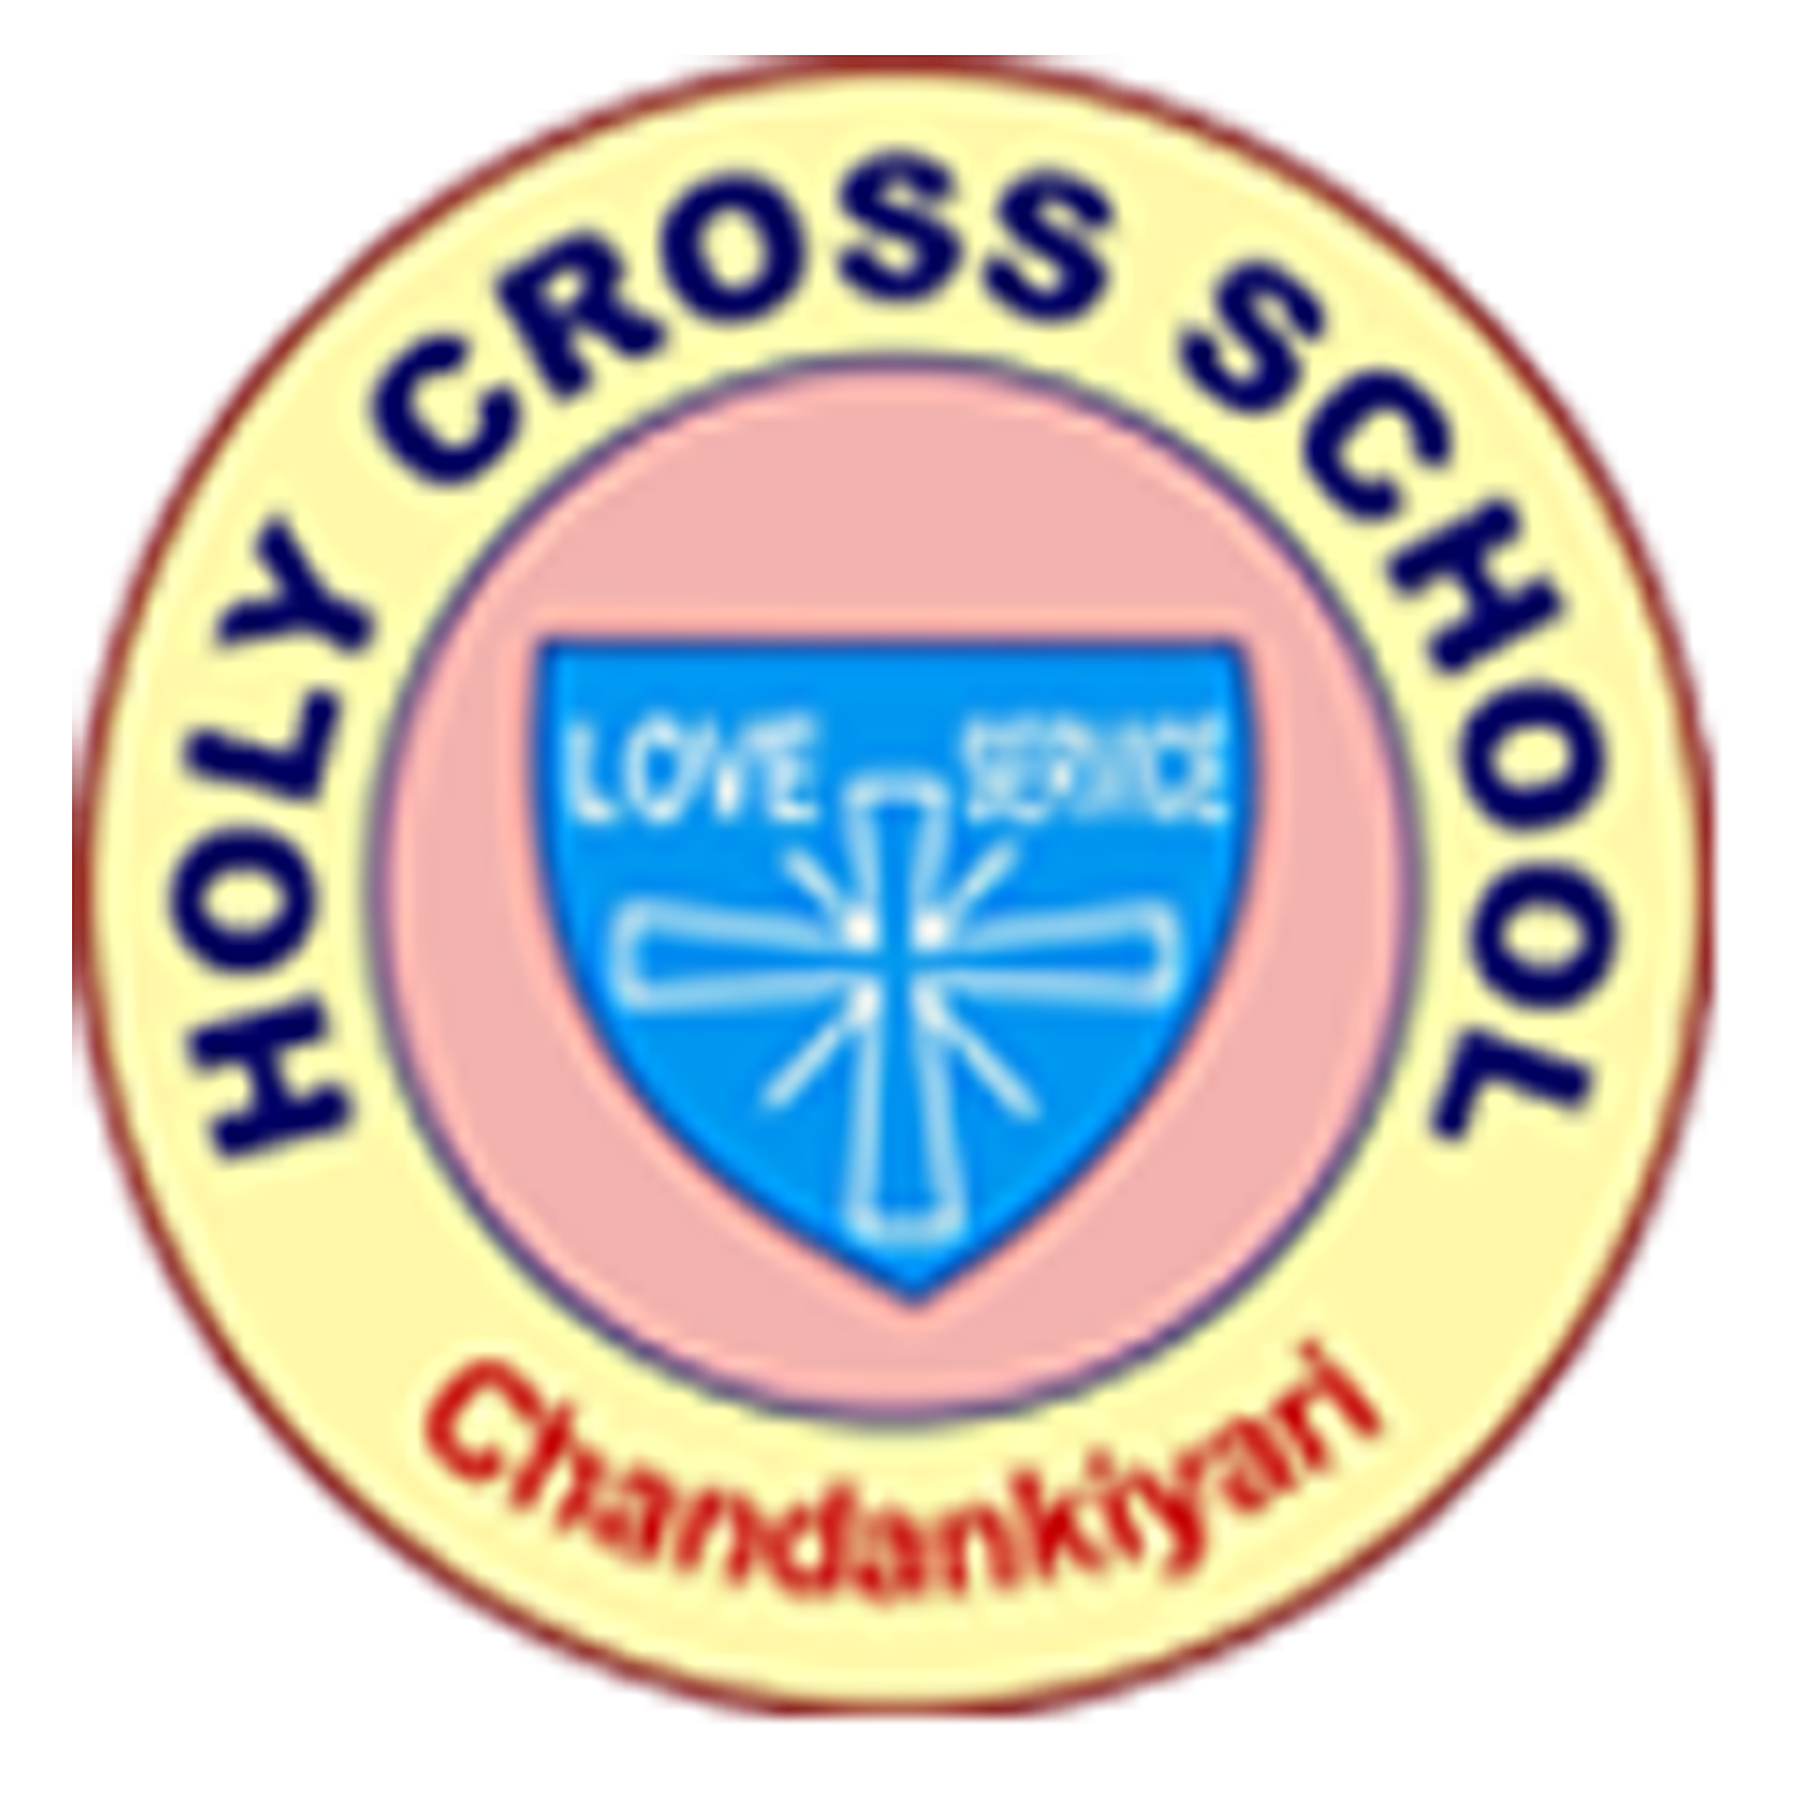 HOLY CROSS SCHOOL